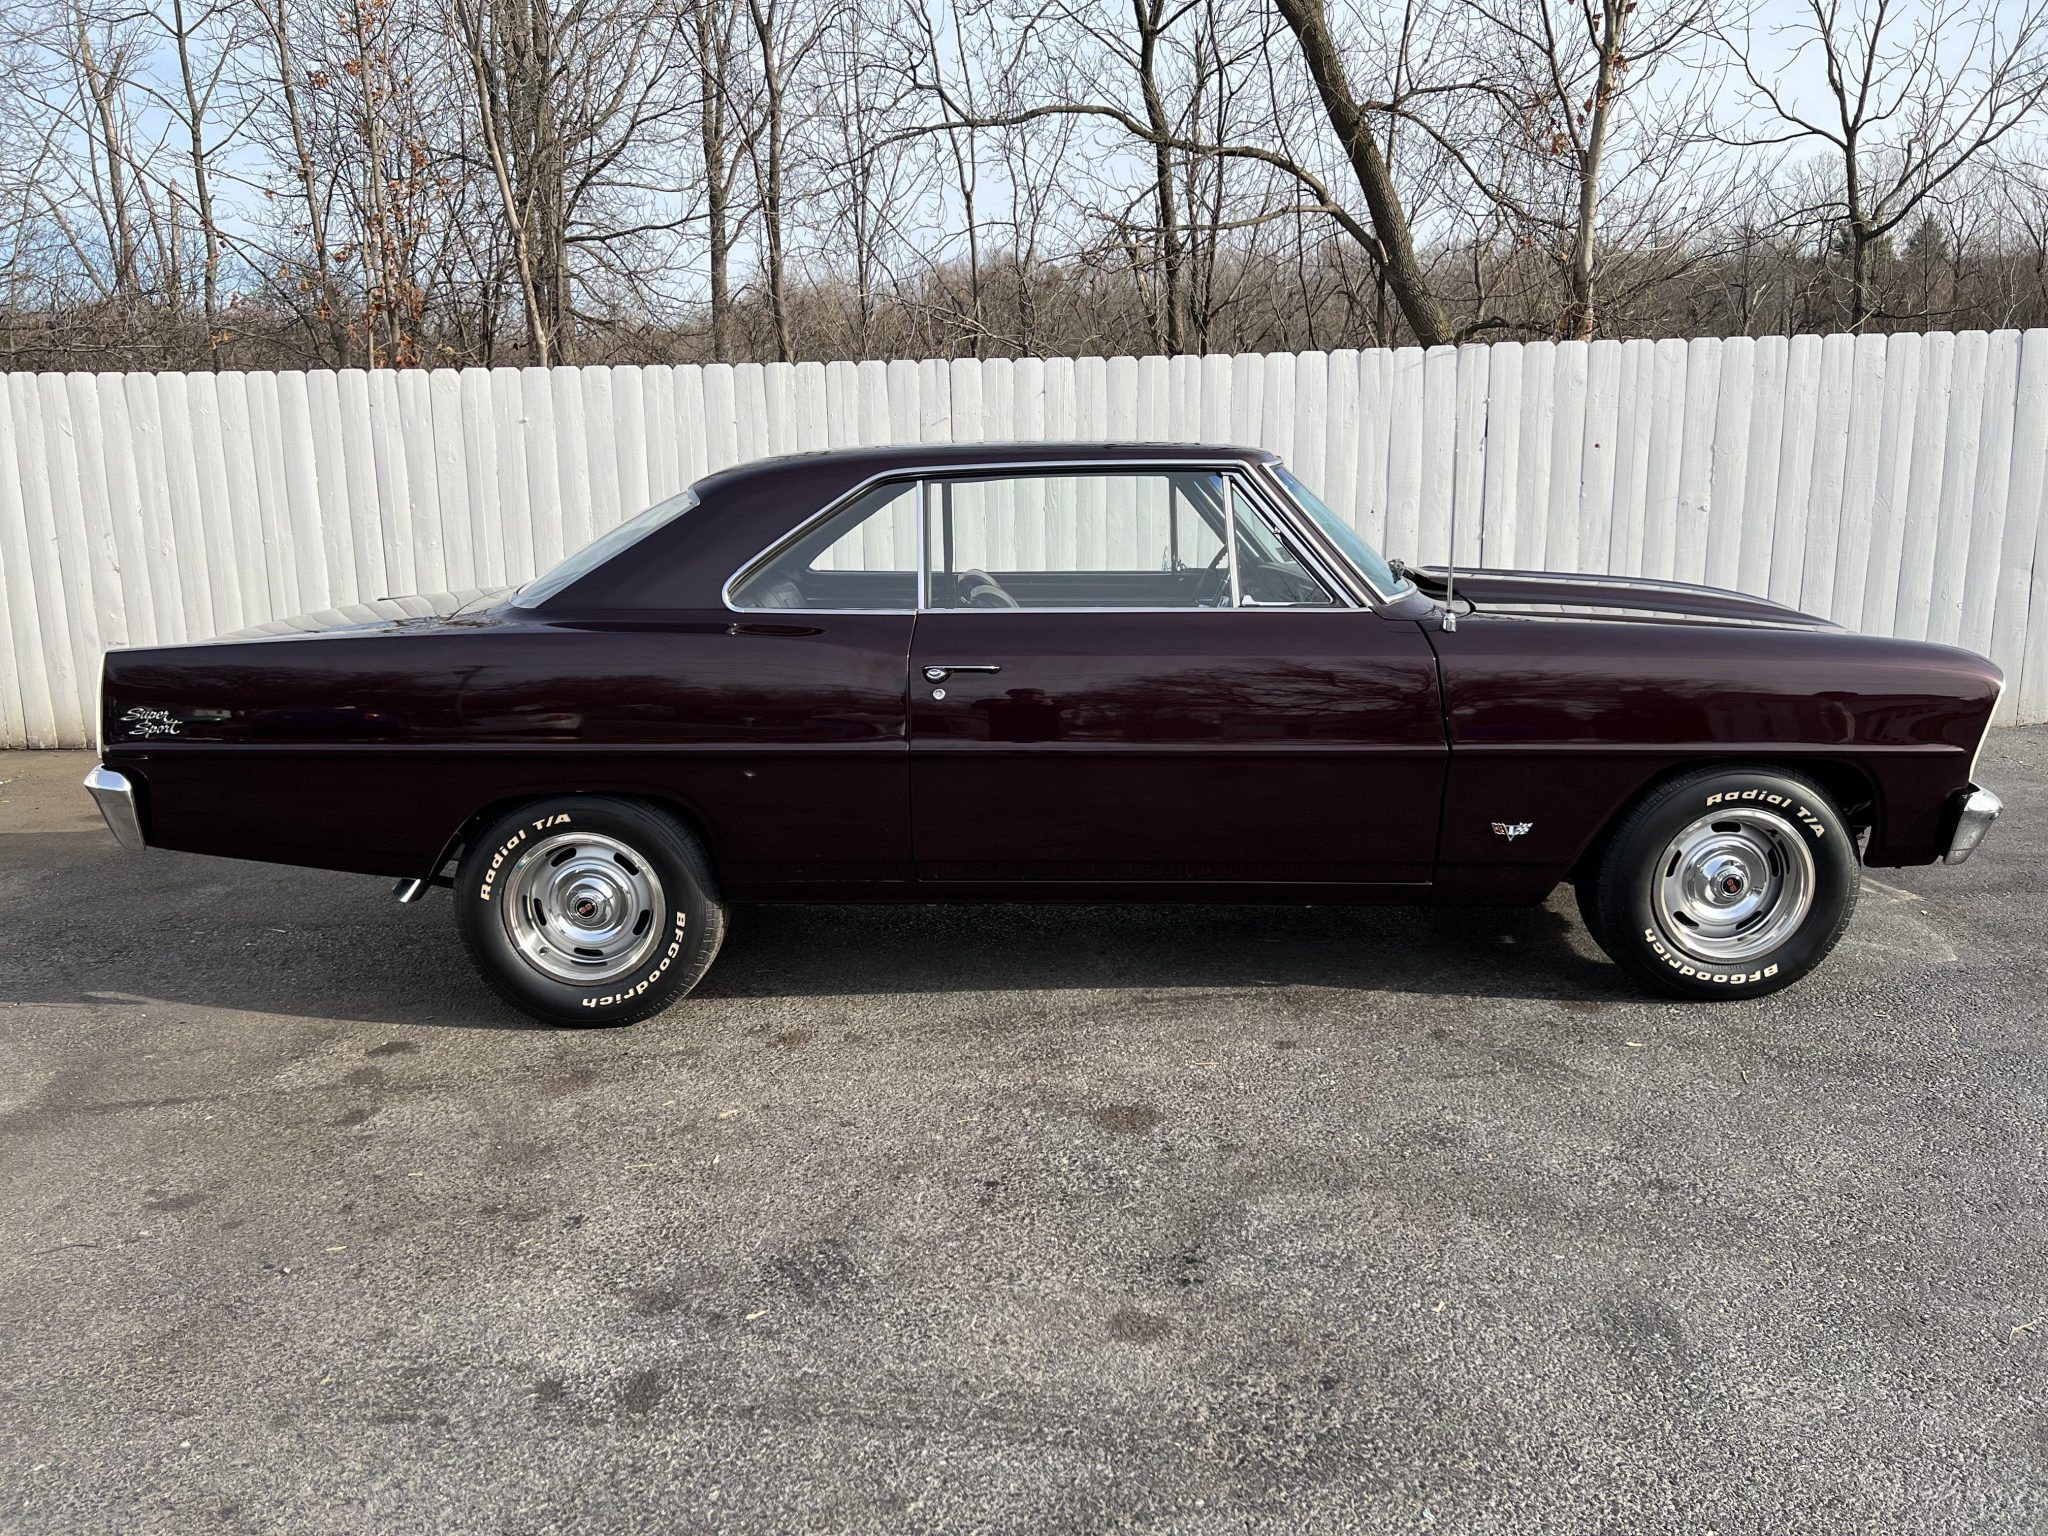 1966-1967 Chevrolet Nova (Second Generation) side view